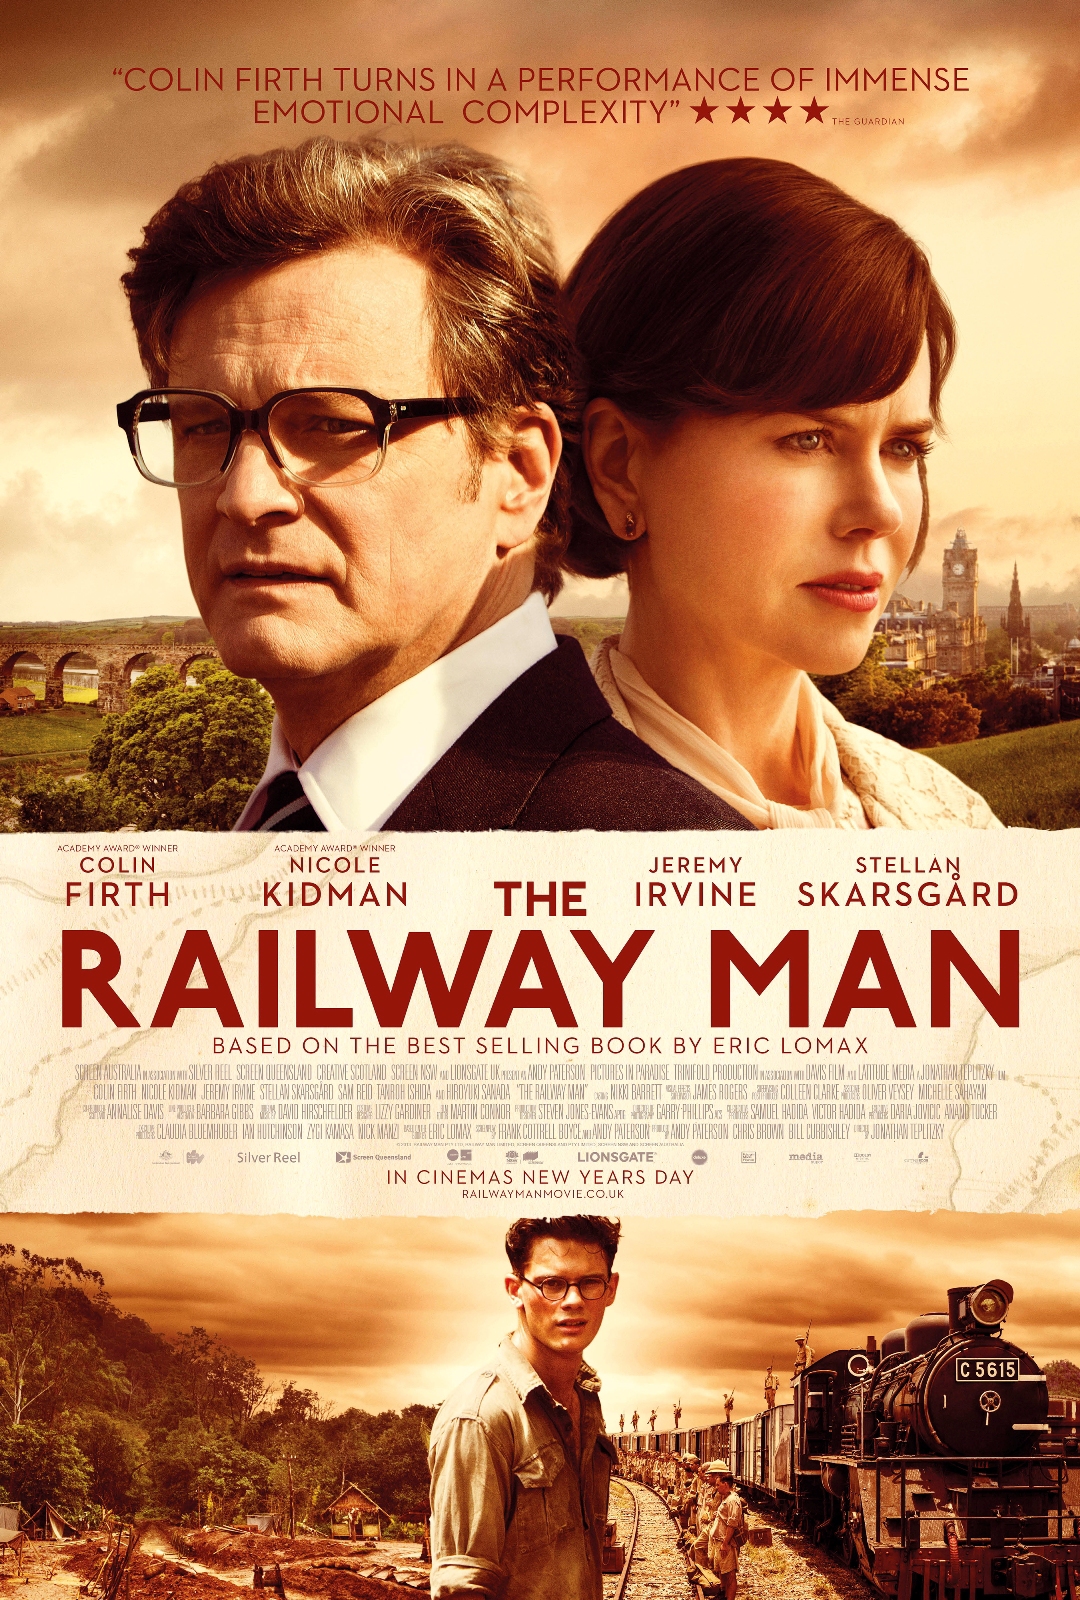 The Railway Man (2013) ★★★★☆